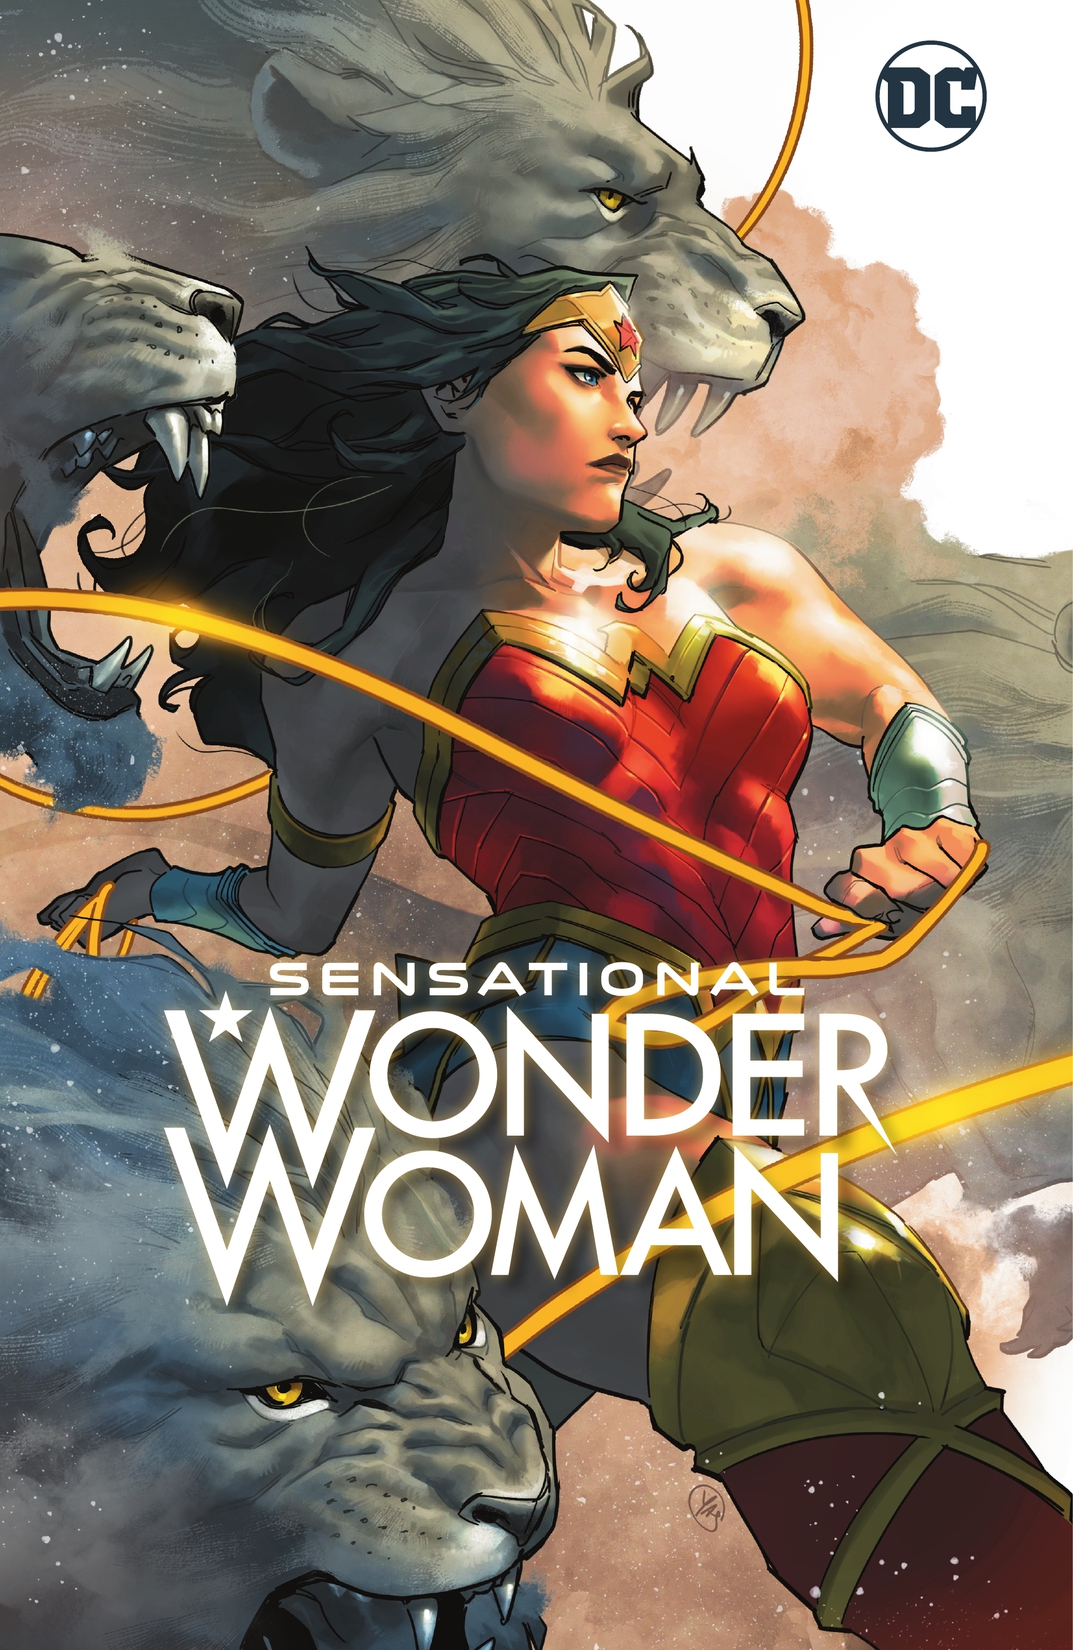 Sensational Wonder Woman preview images